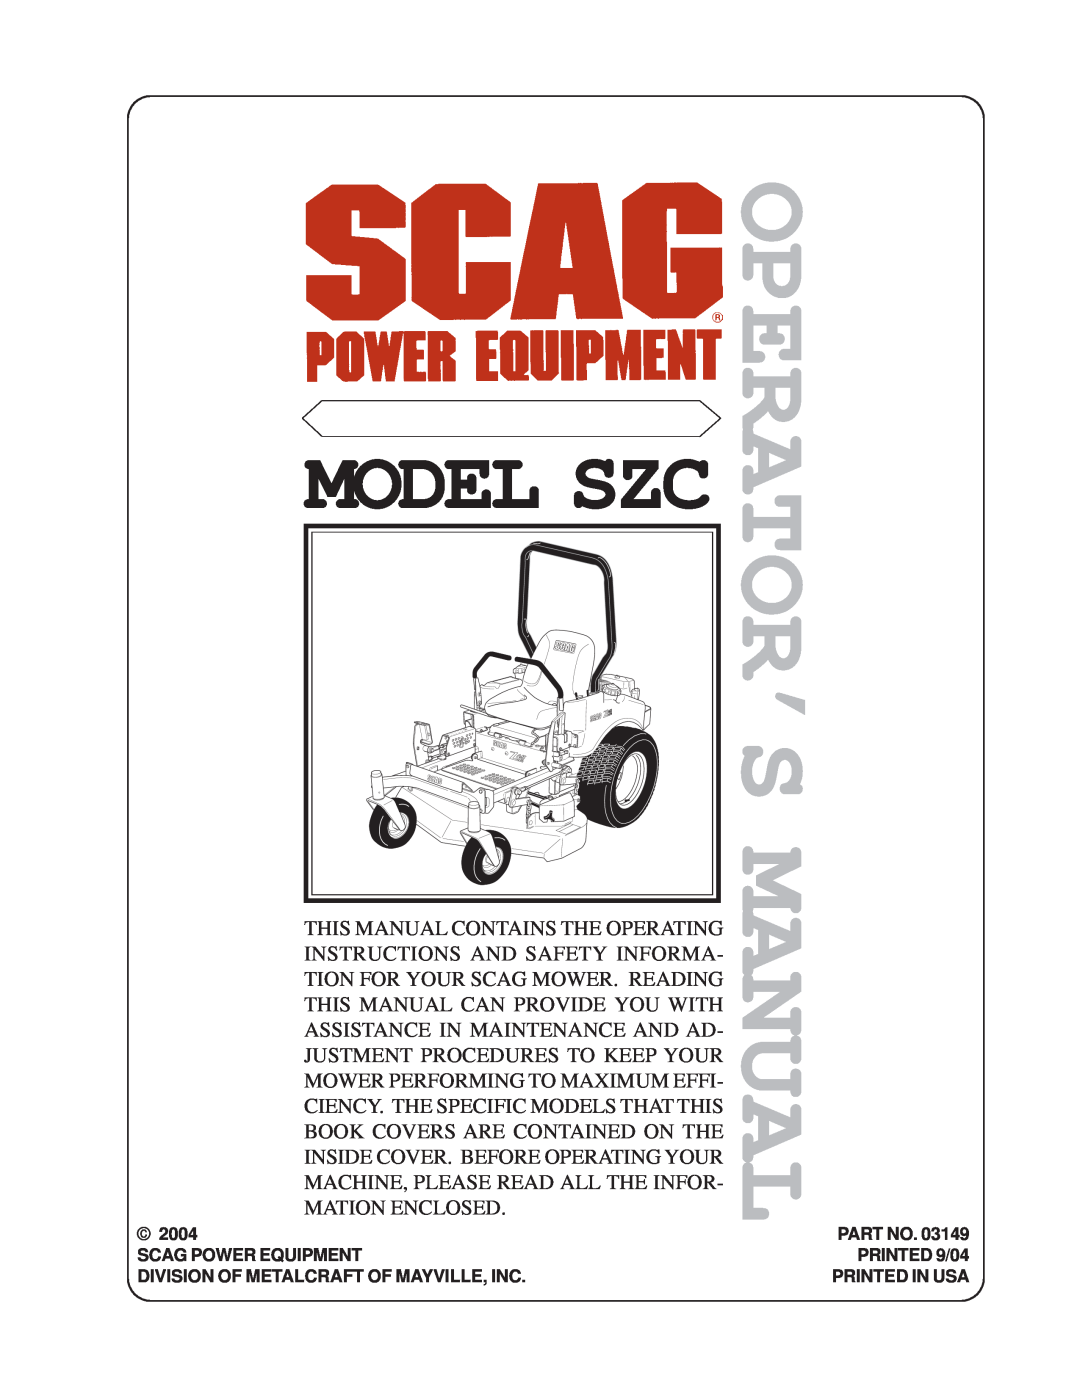 Scag Power Equipment SZC manual Operator’S Manual, Model Szc 